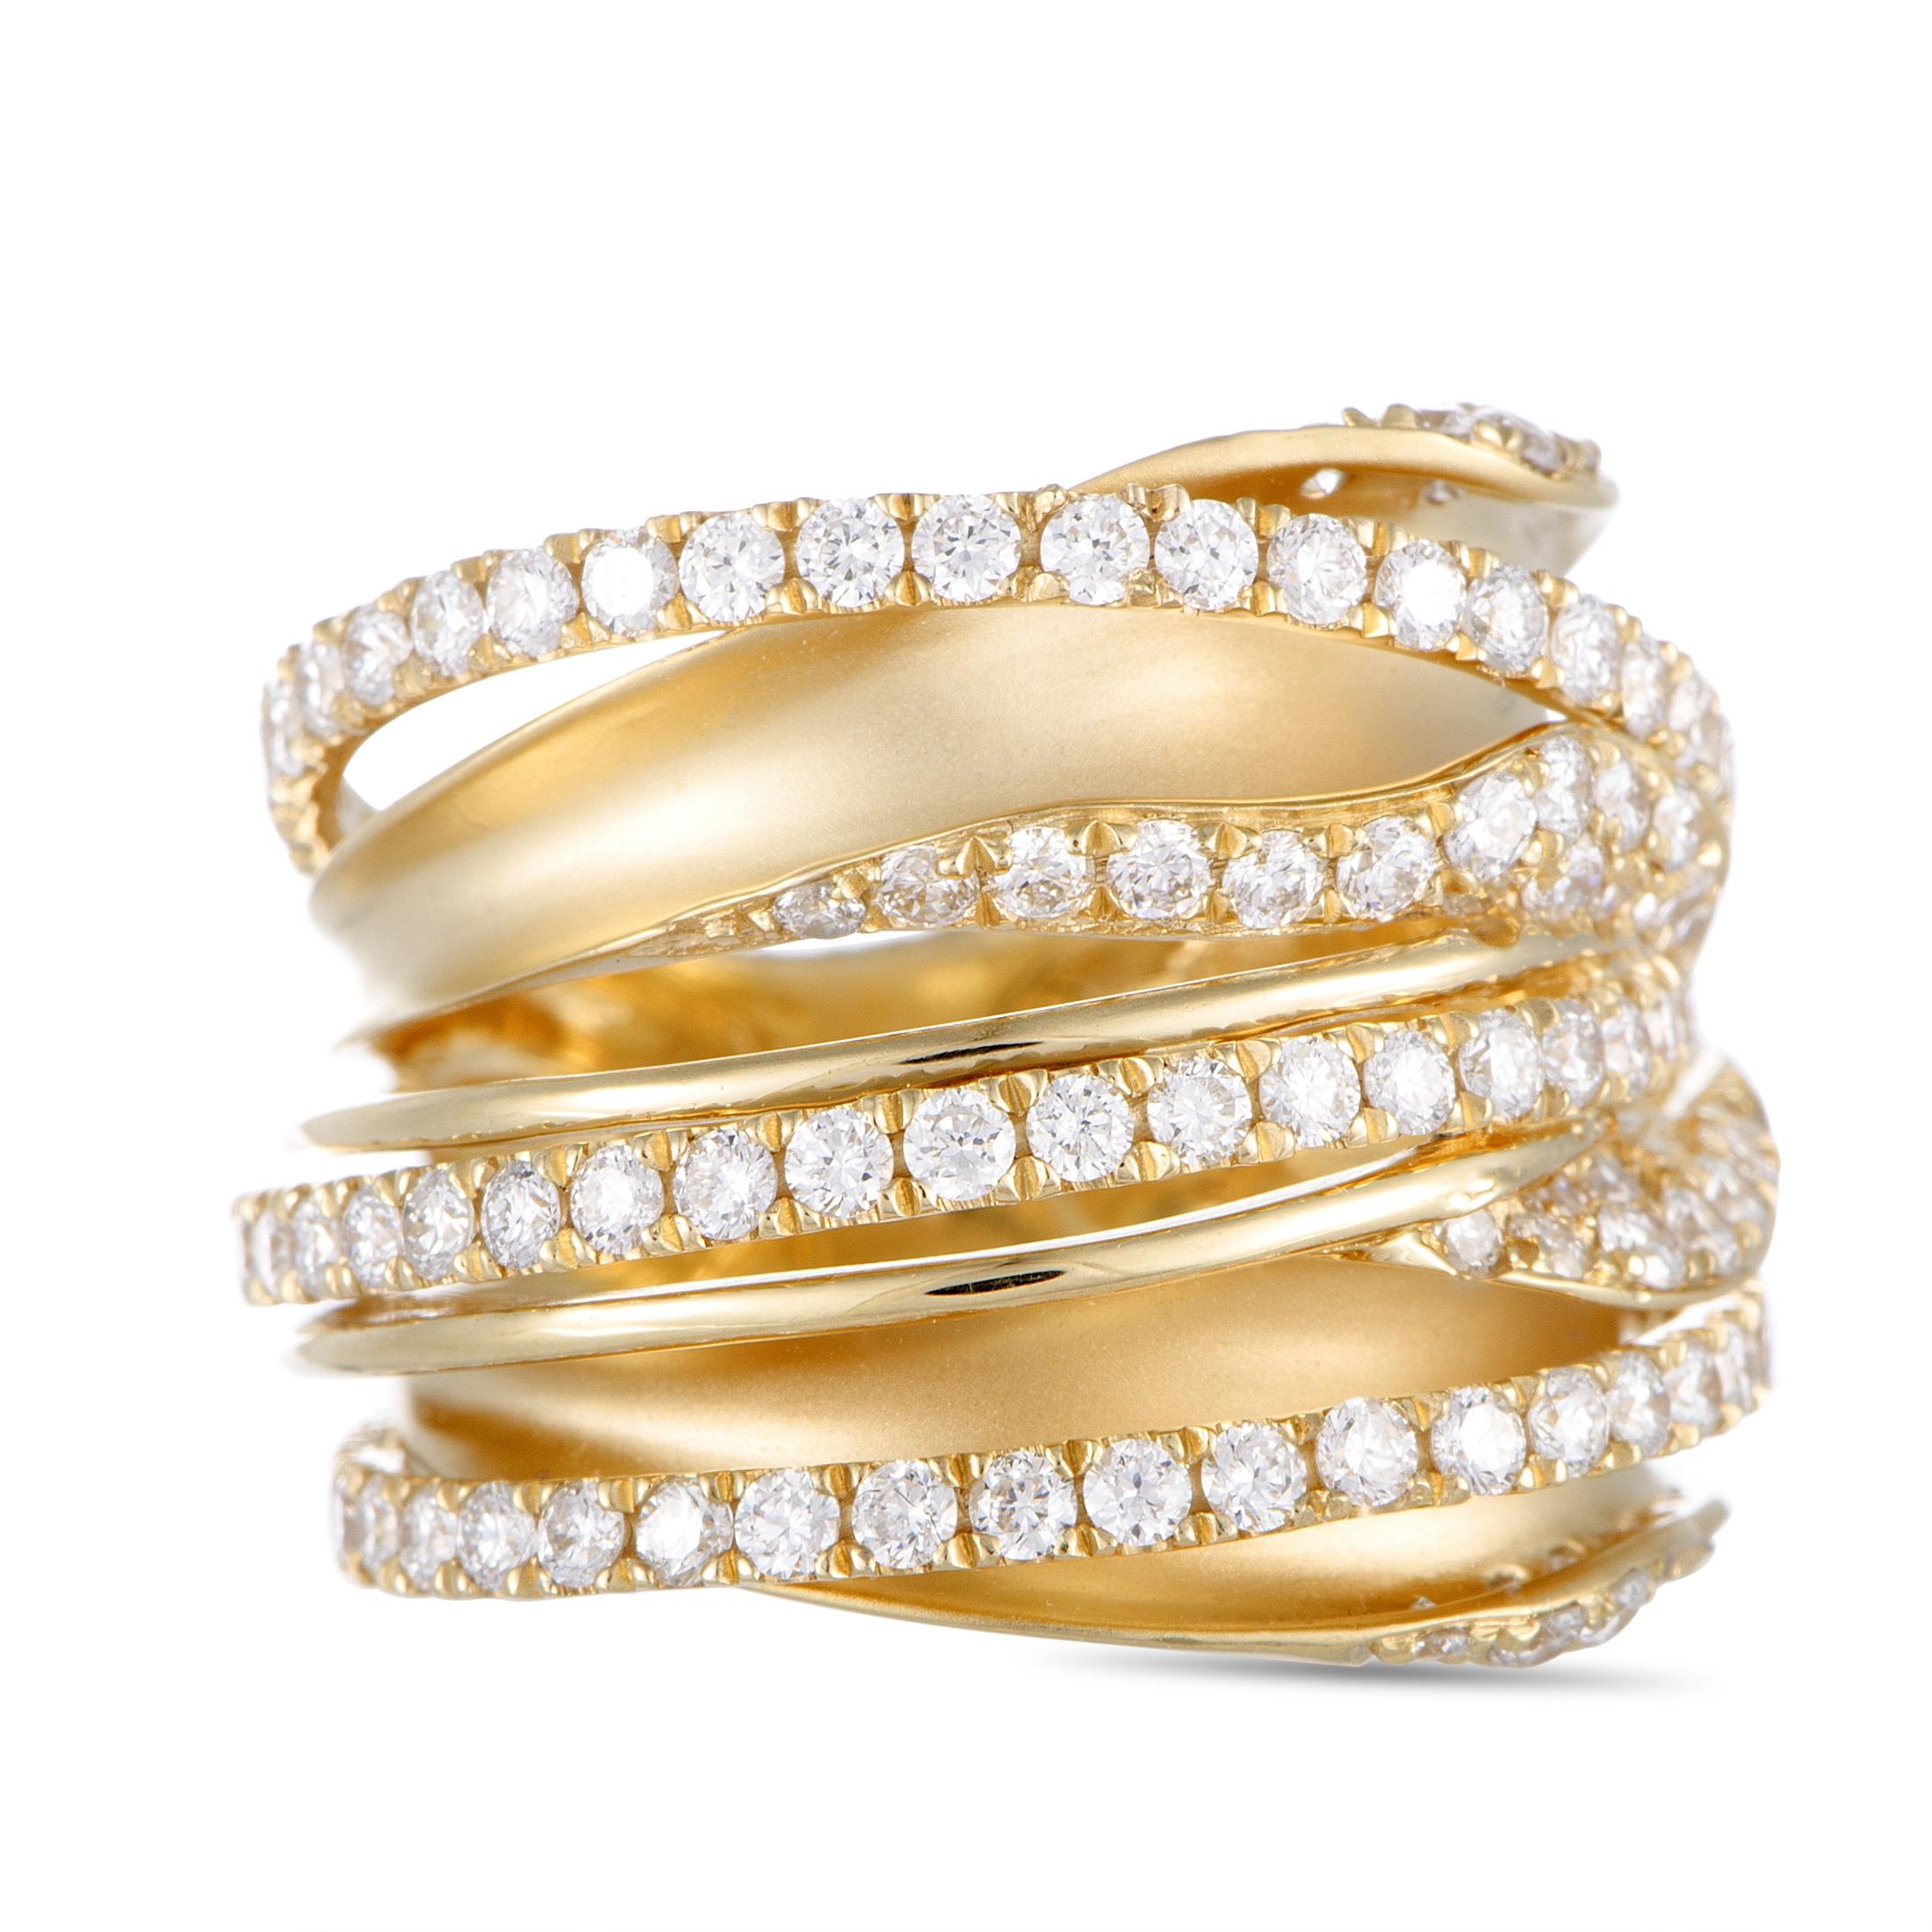 LB Exclusive 18 Karat Yellow Gold Diamond Pave Multi-Band Ring 1